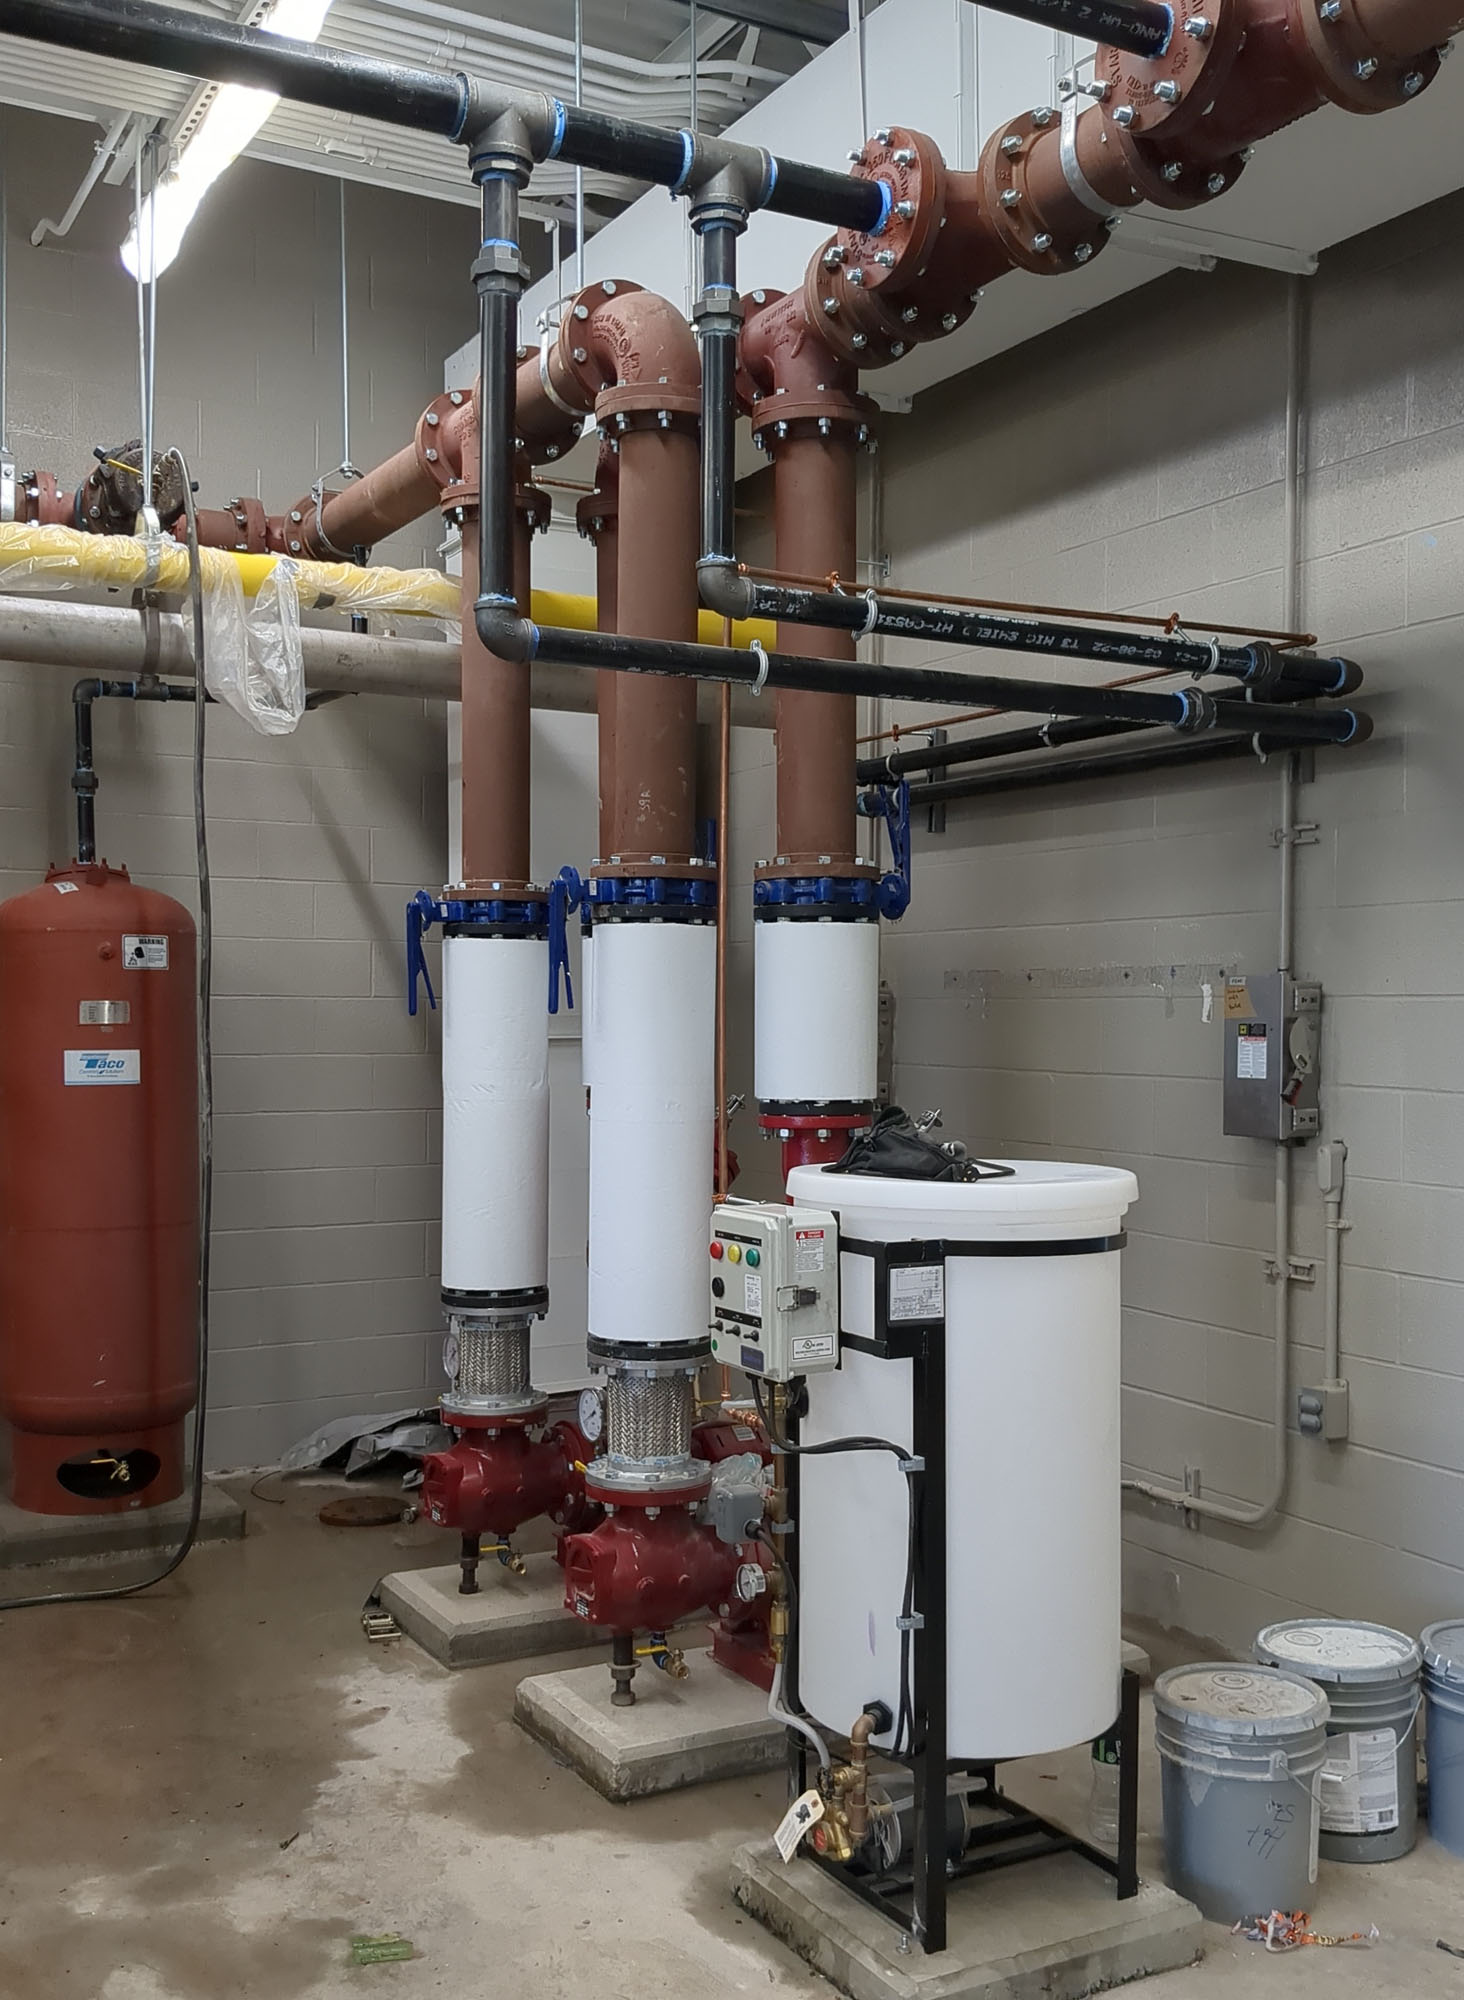 DCB Hot Water Pumps - Nov 22